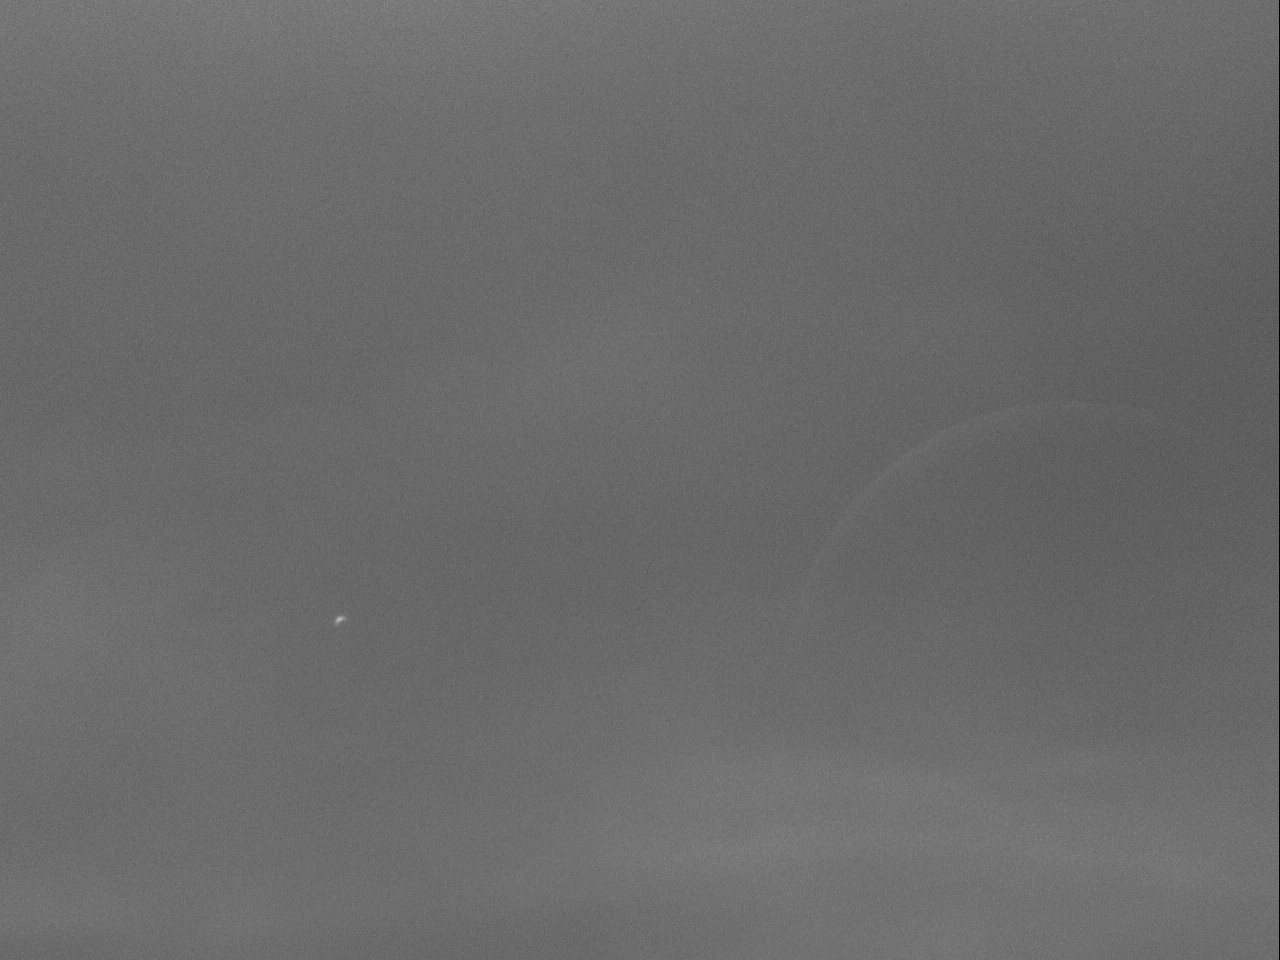 Mond und Venus um 16:35 MESZ